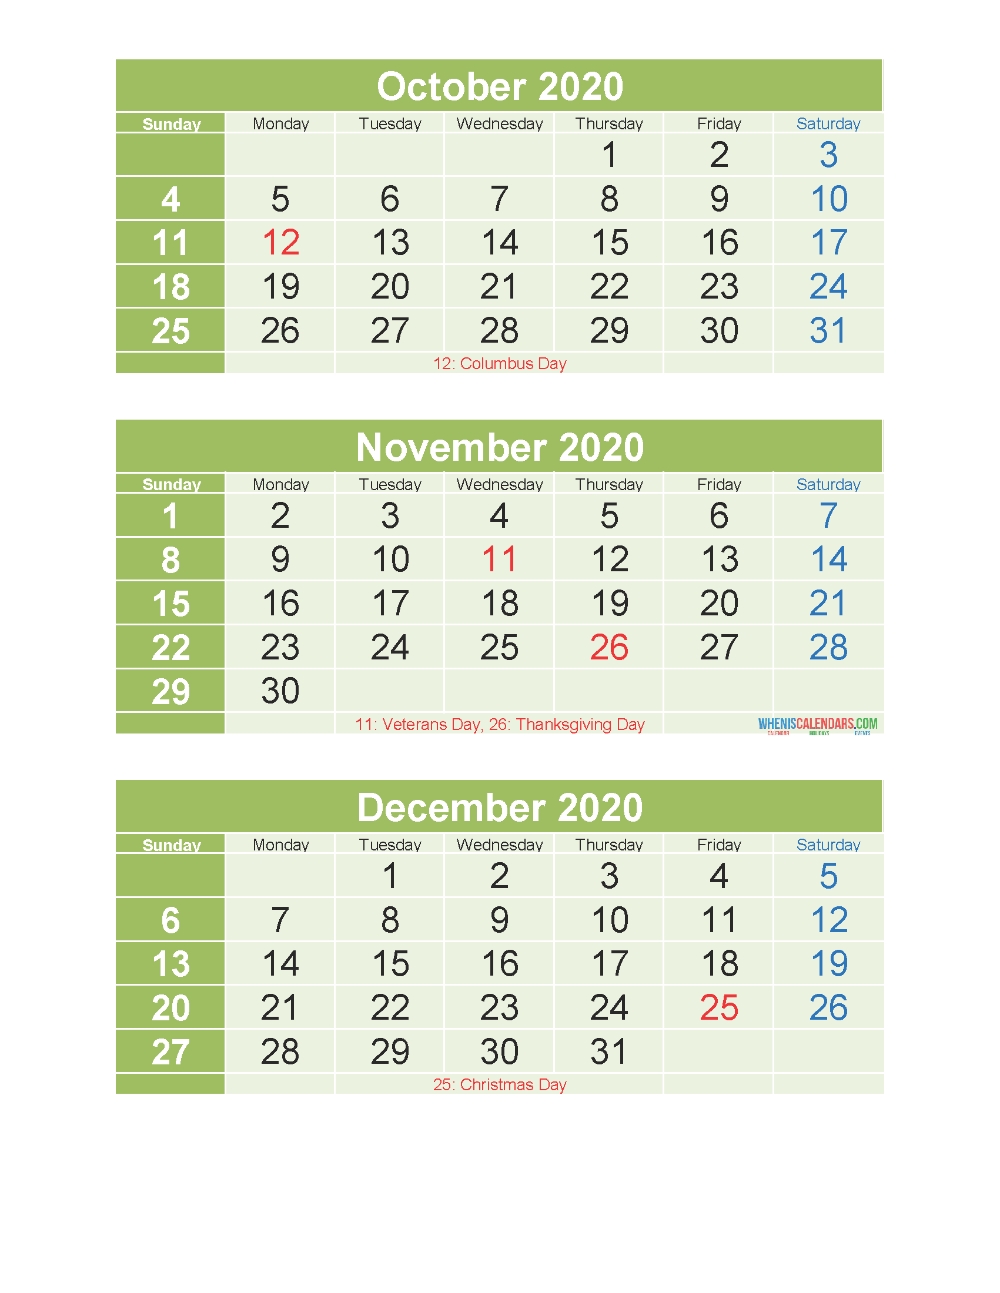 Free Printable 3 Month Calendar 2020 Oct Nov Dec Pdf, Excel Perky Three Calendar Monthas From 25 October